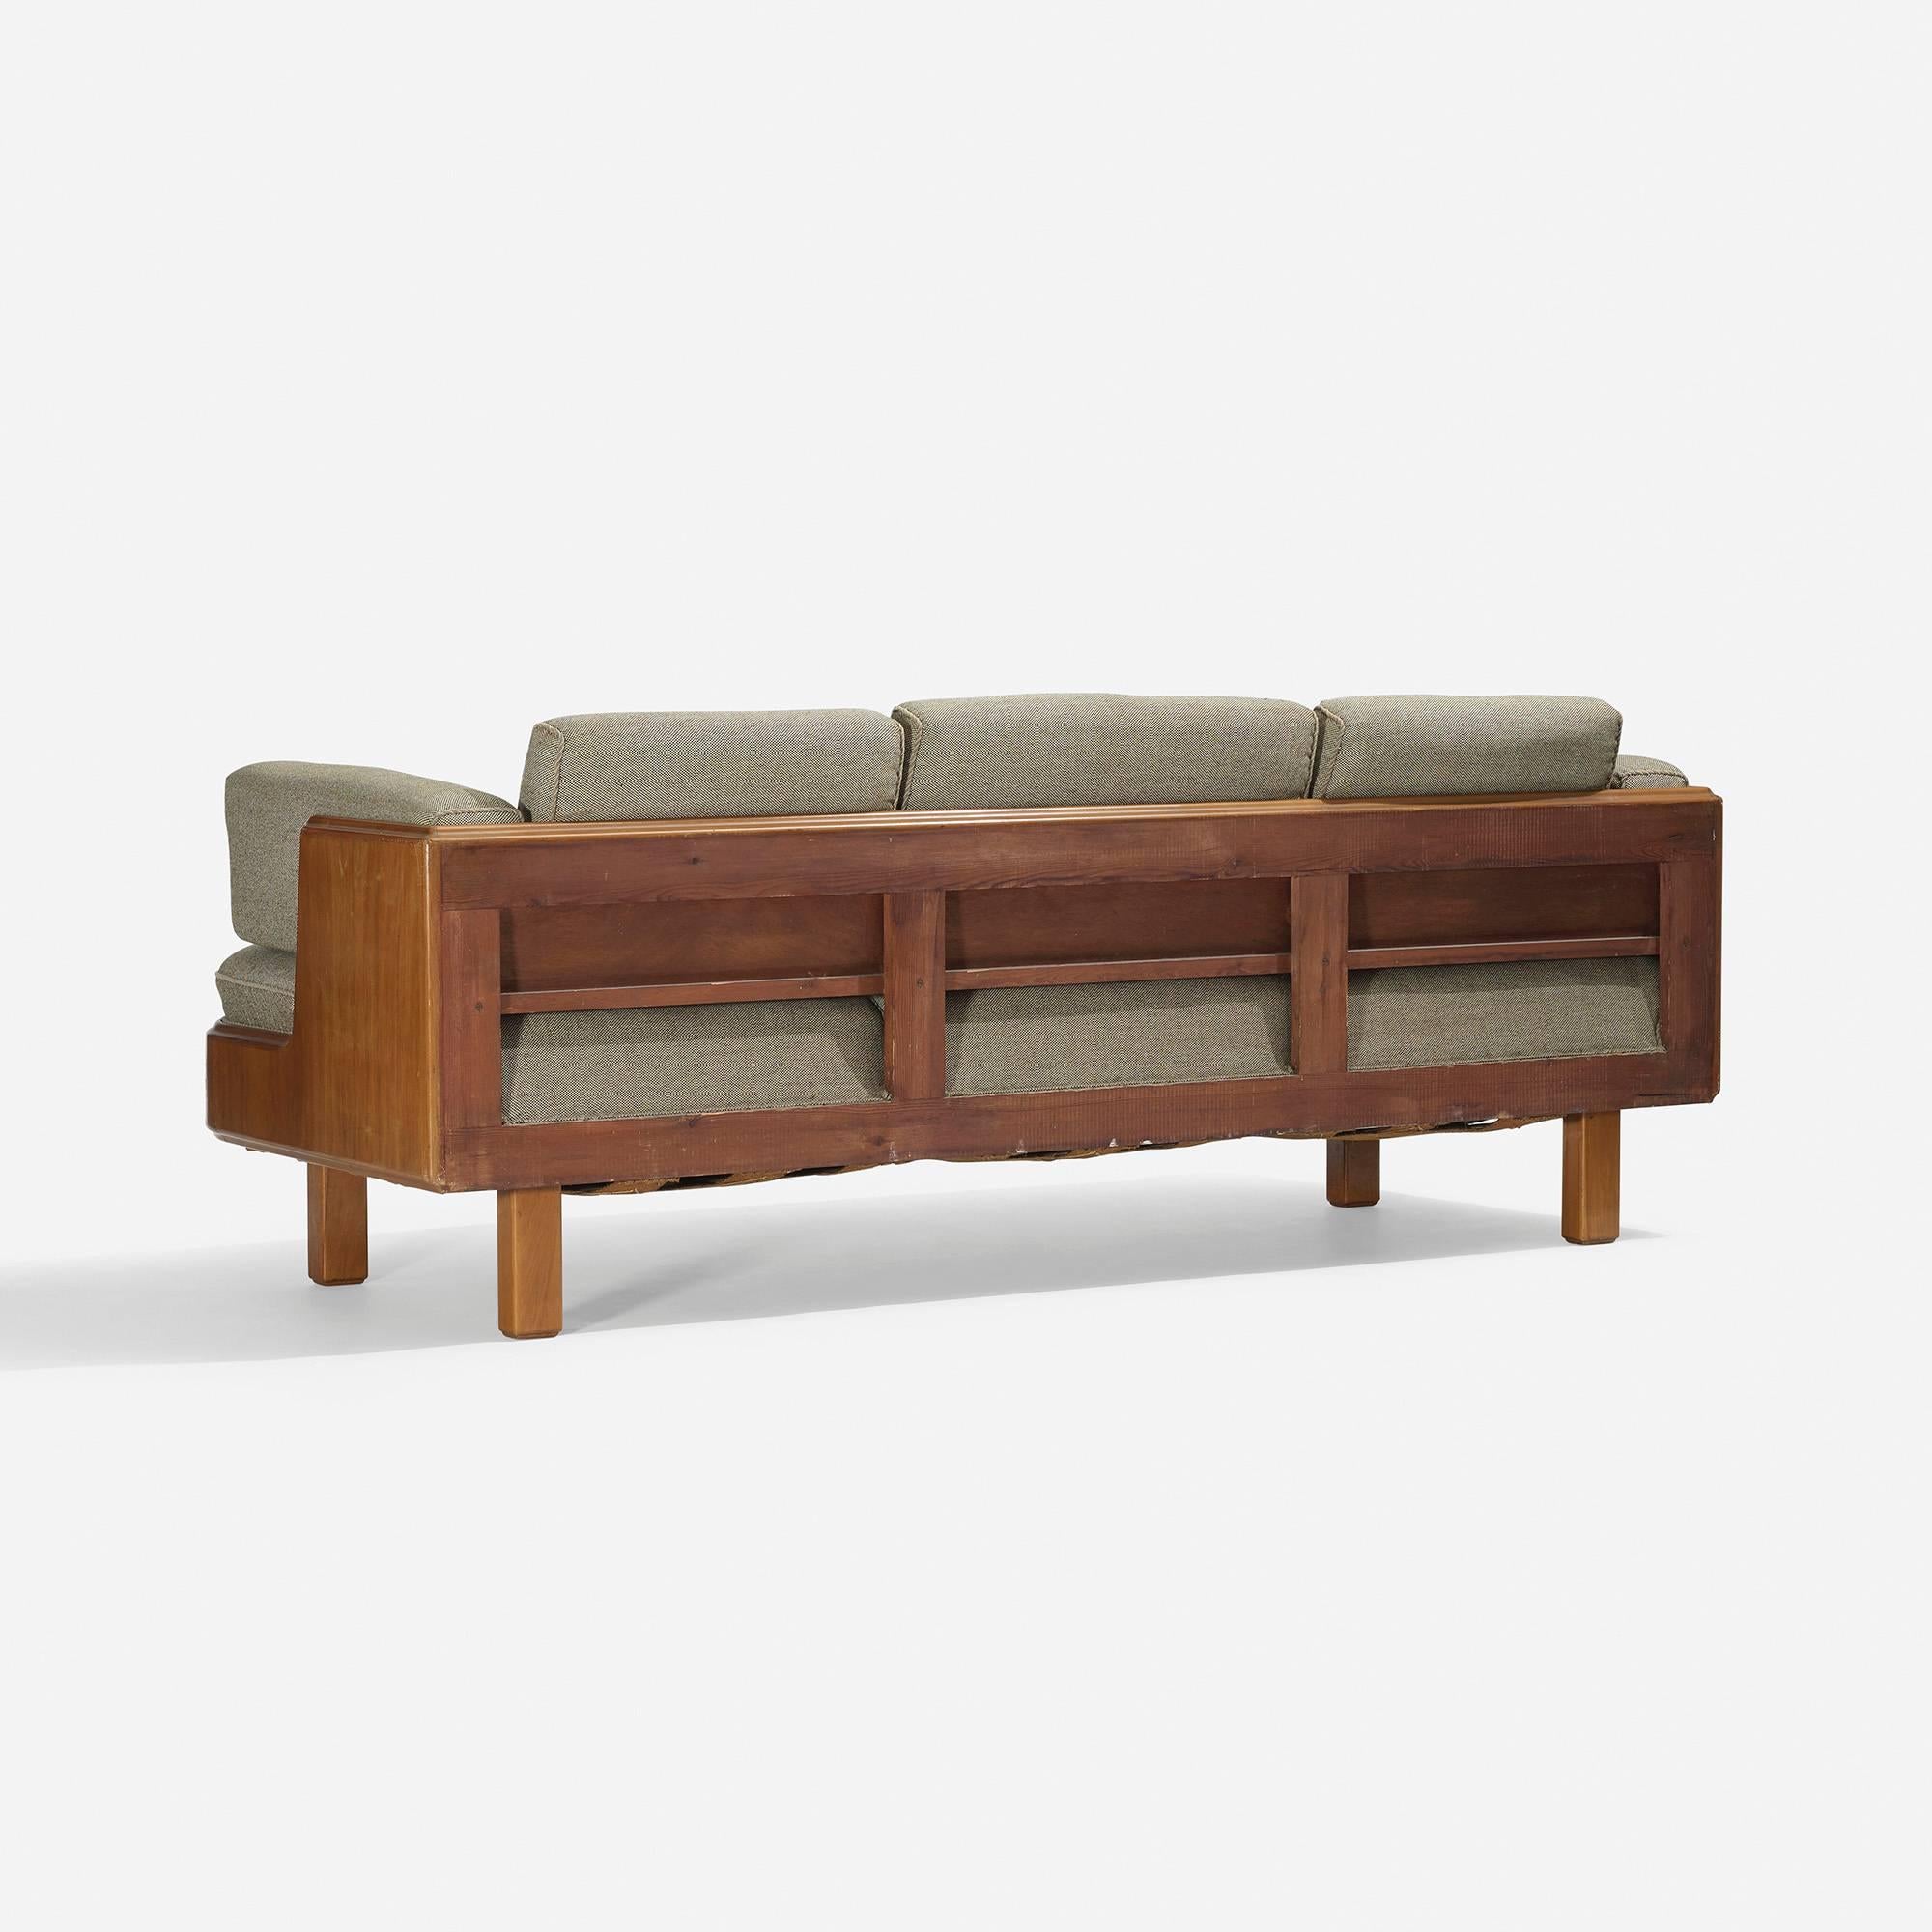 This sofa was custom designed for Schlegel's friend and publisher, Holger Jensen.